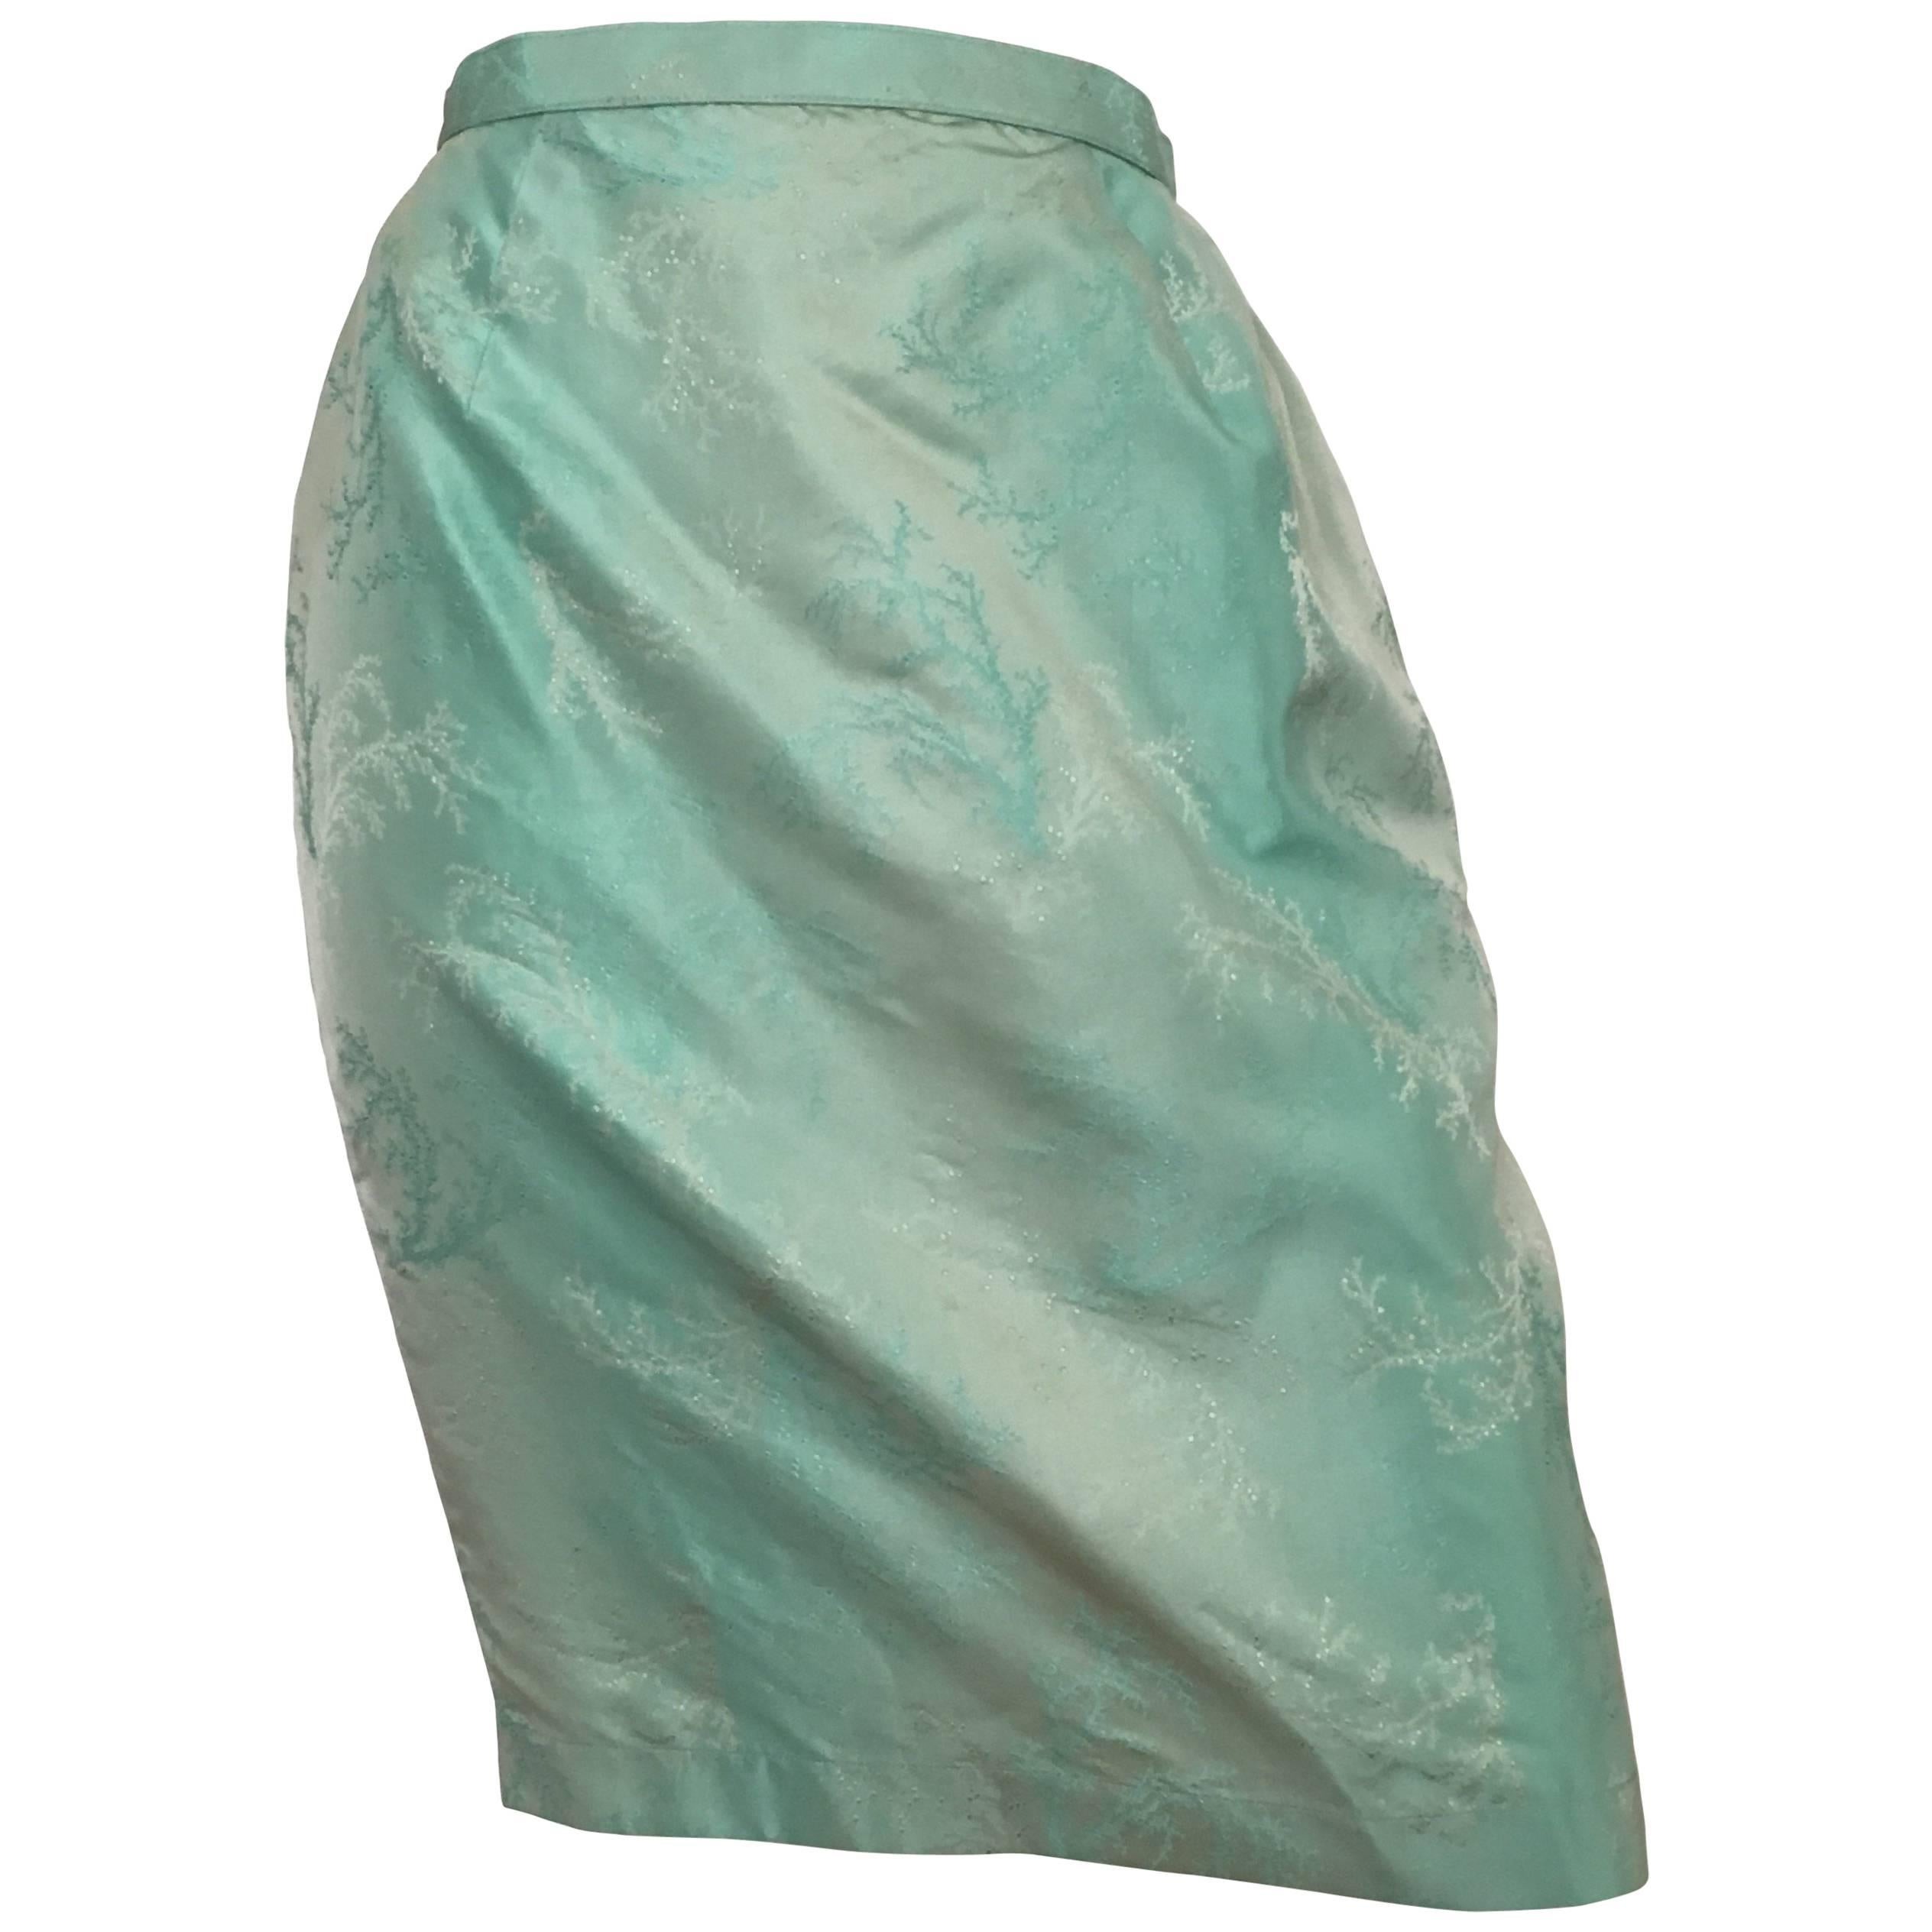 Thierry Mugler Iridescent Aqua Skirt Size 4/6. For Sale